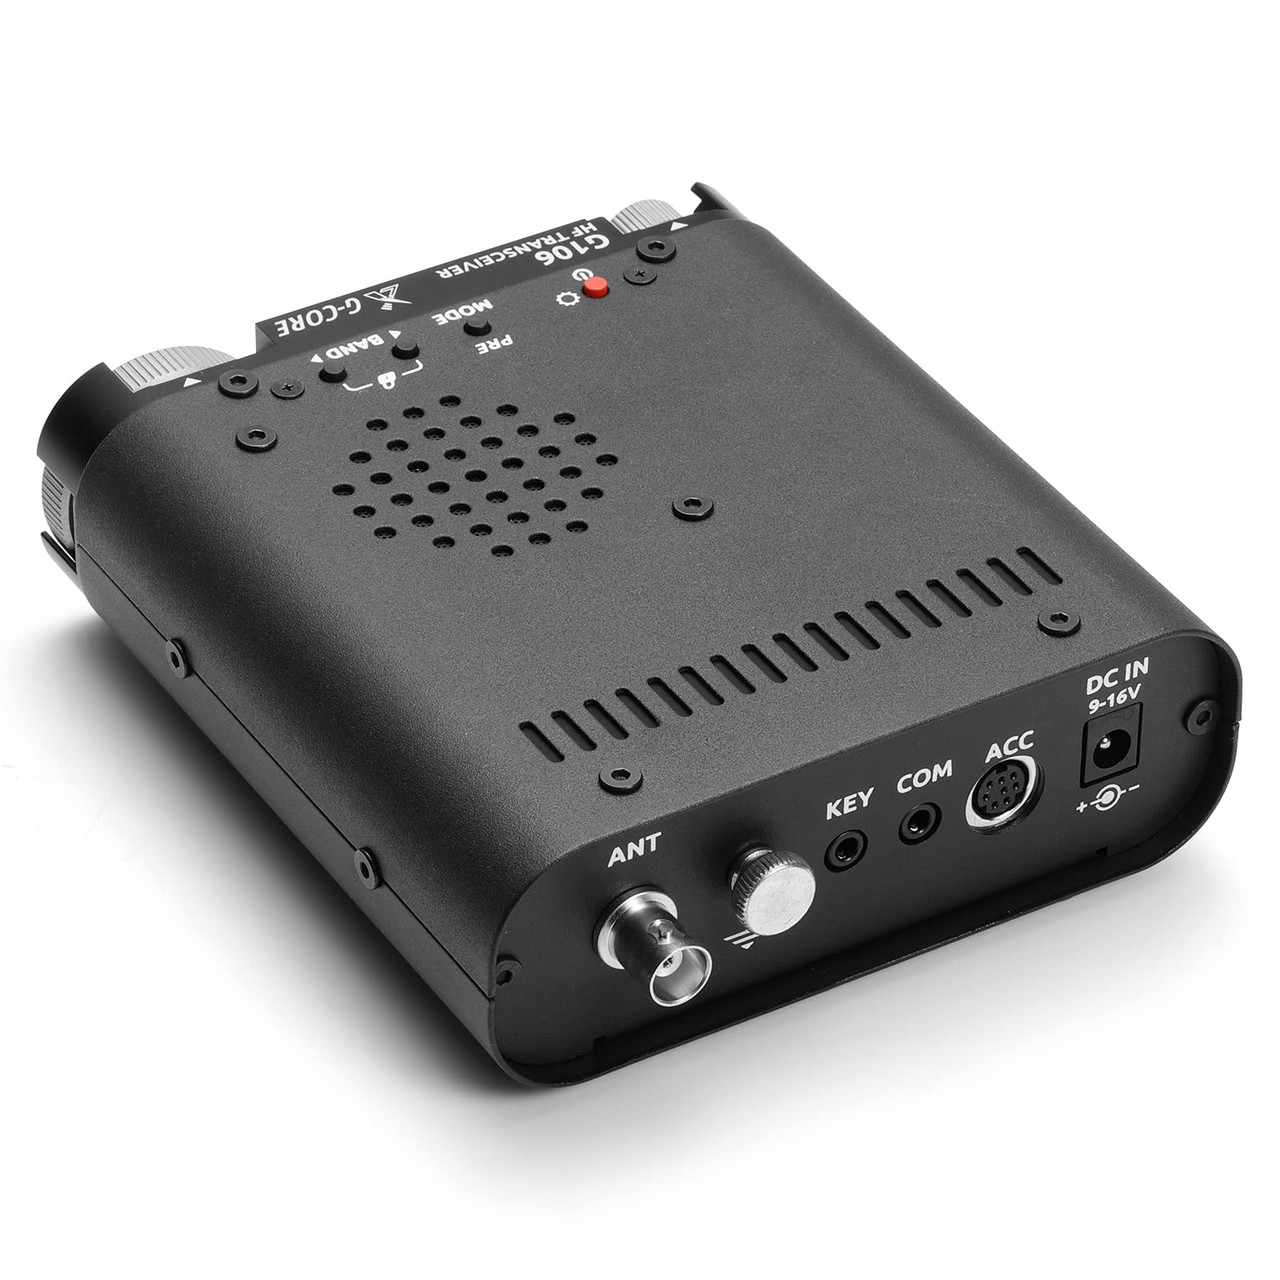 Xiegu G106 HF/50MHz All-Mode Ultra Portable SDR Transceiver